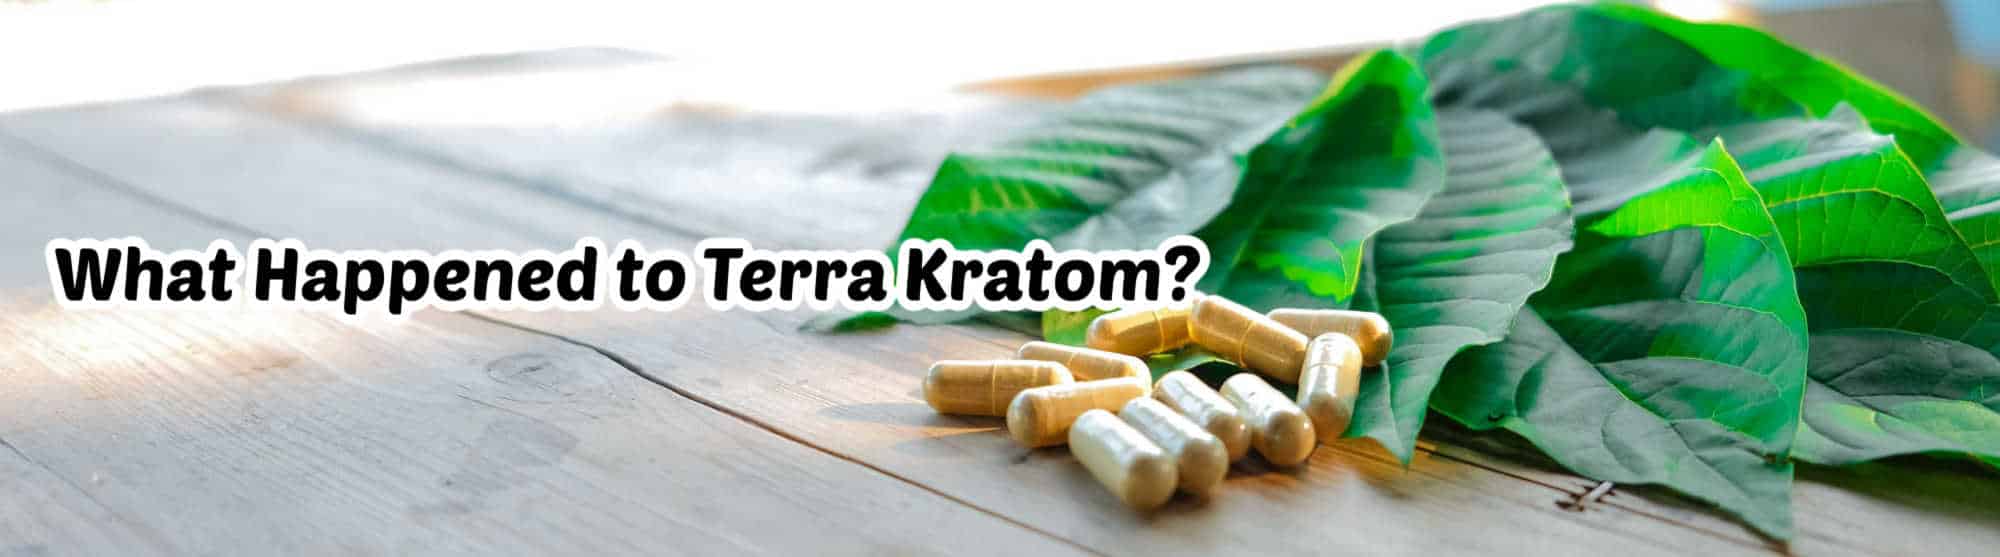 image of what happened to terra kratom